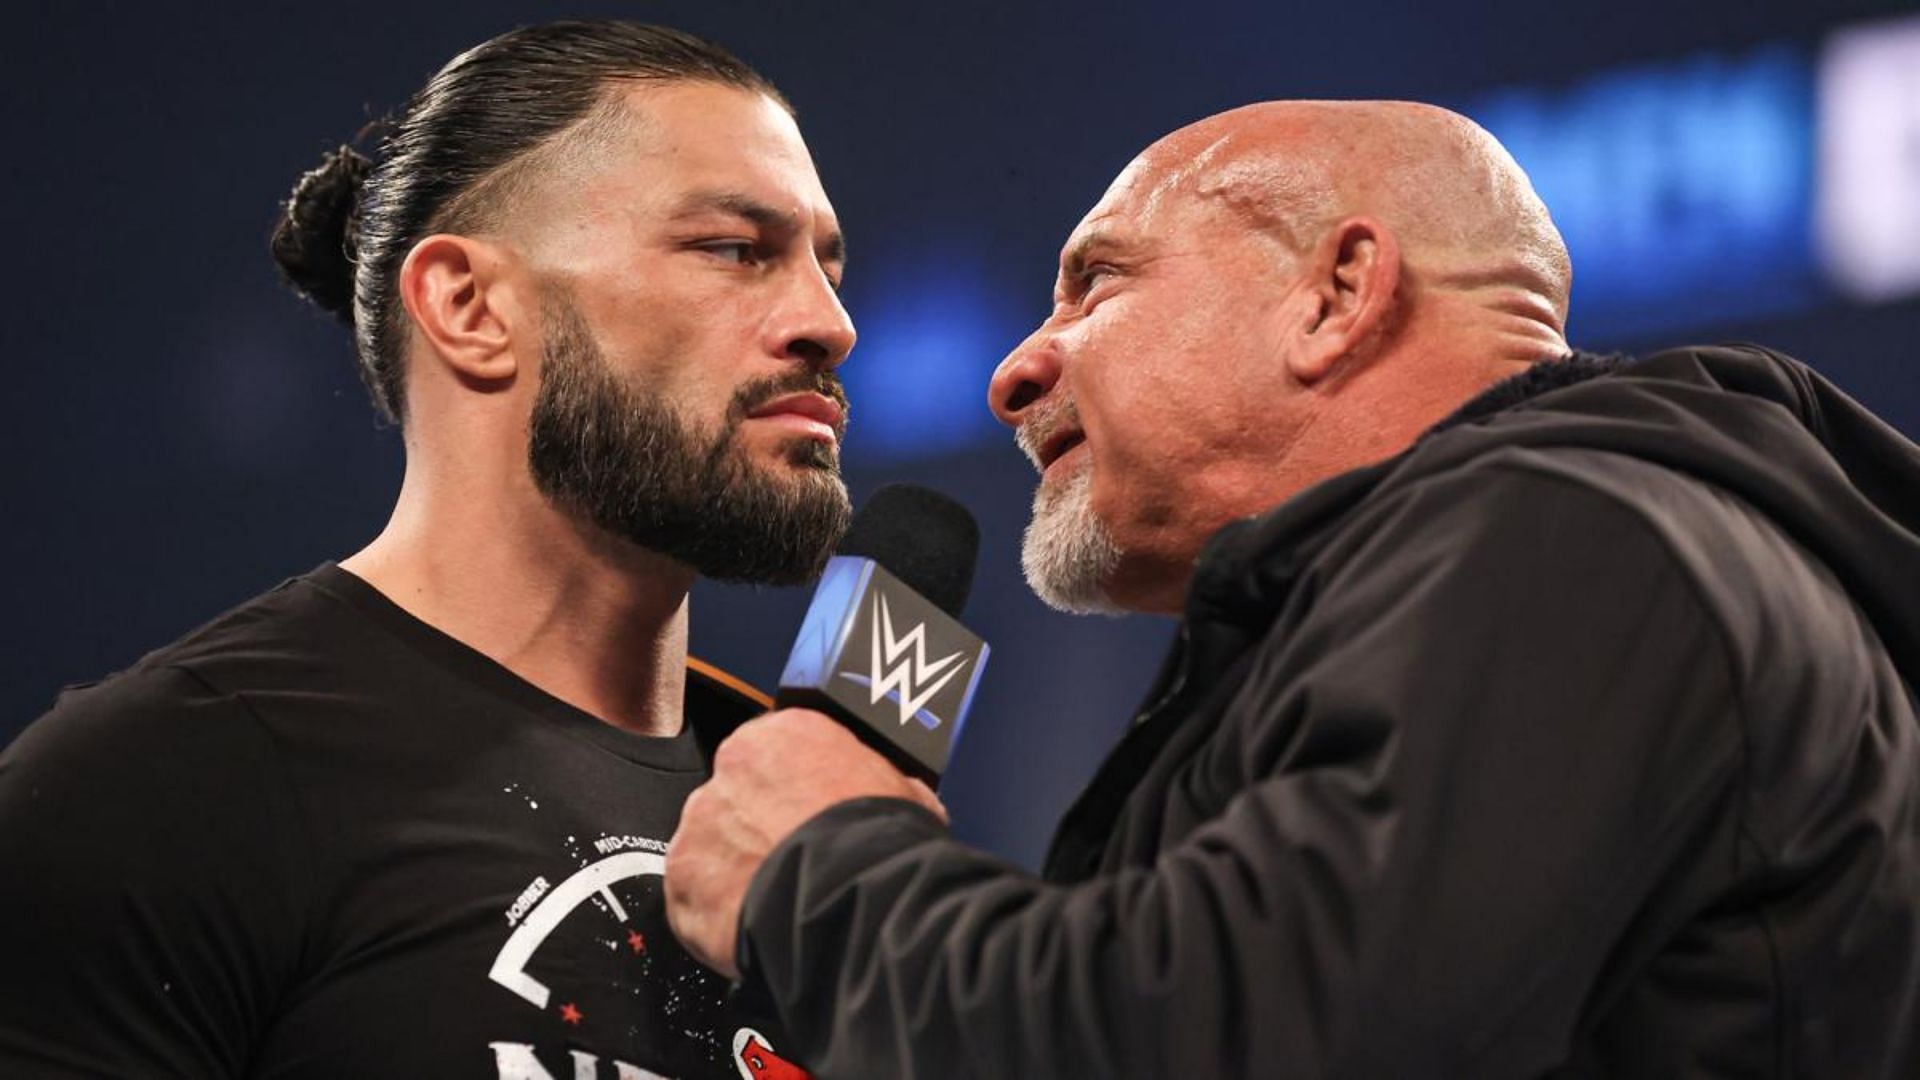 Roman Reigns will defend his Universal Championship against Goldberg